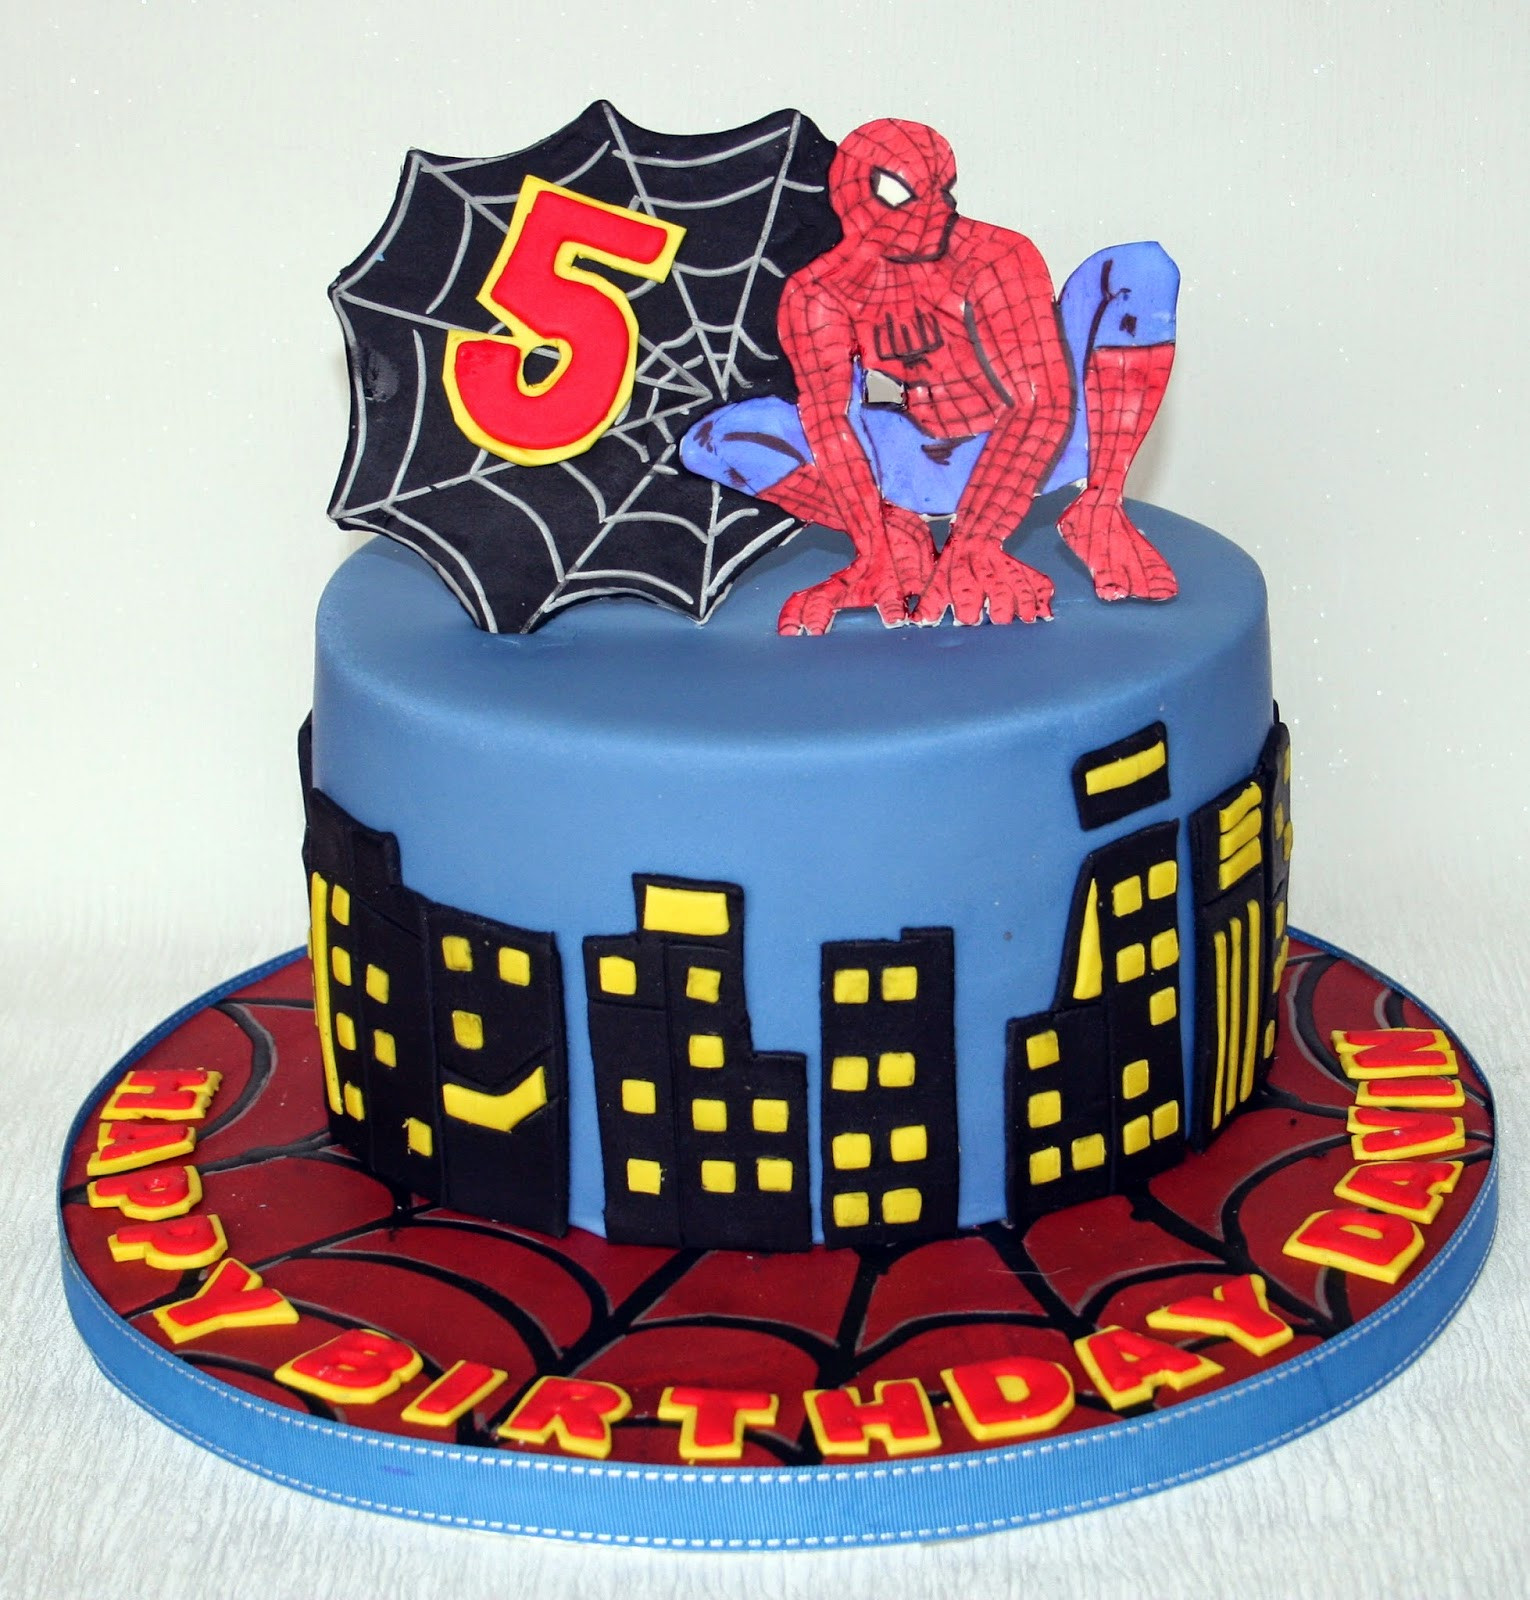 Best ideas about Spiderman Birthday Cake
. Save or Pin 1000 ideas about Cake Spiderman on Pinterest Now.